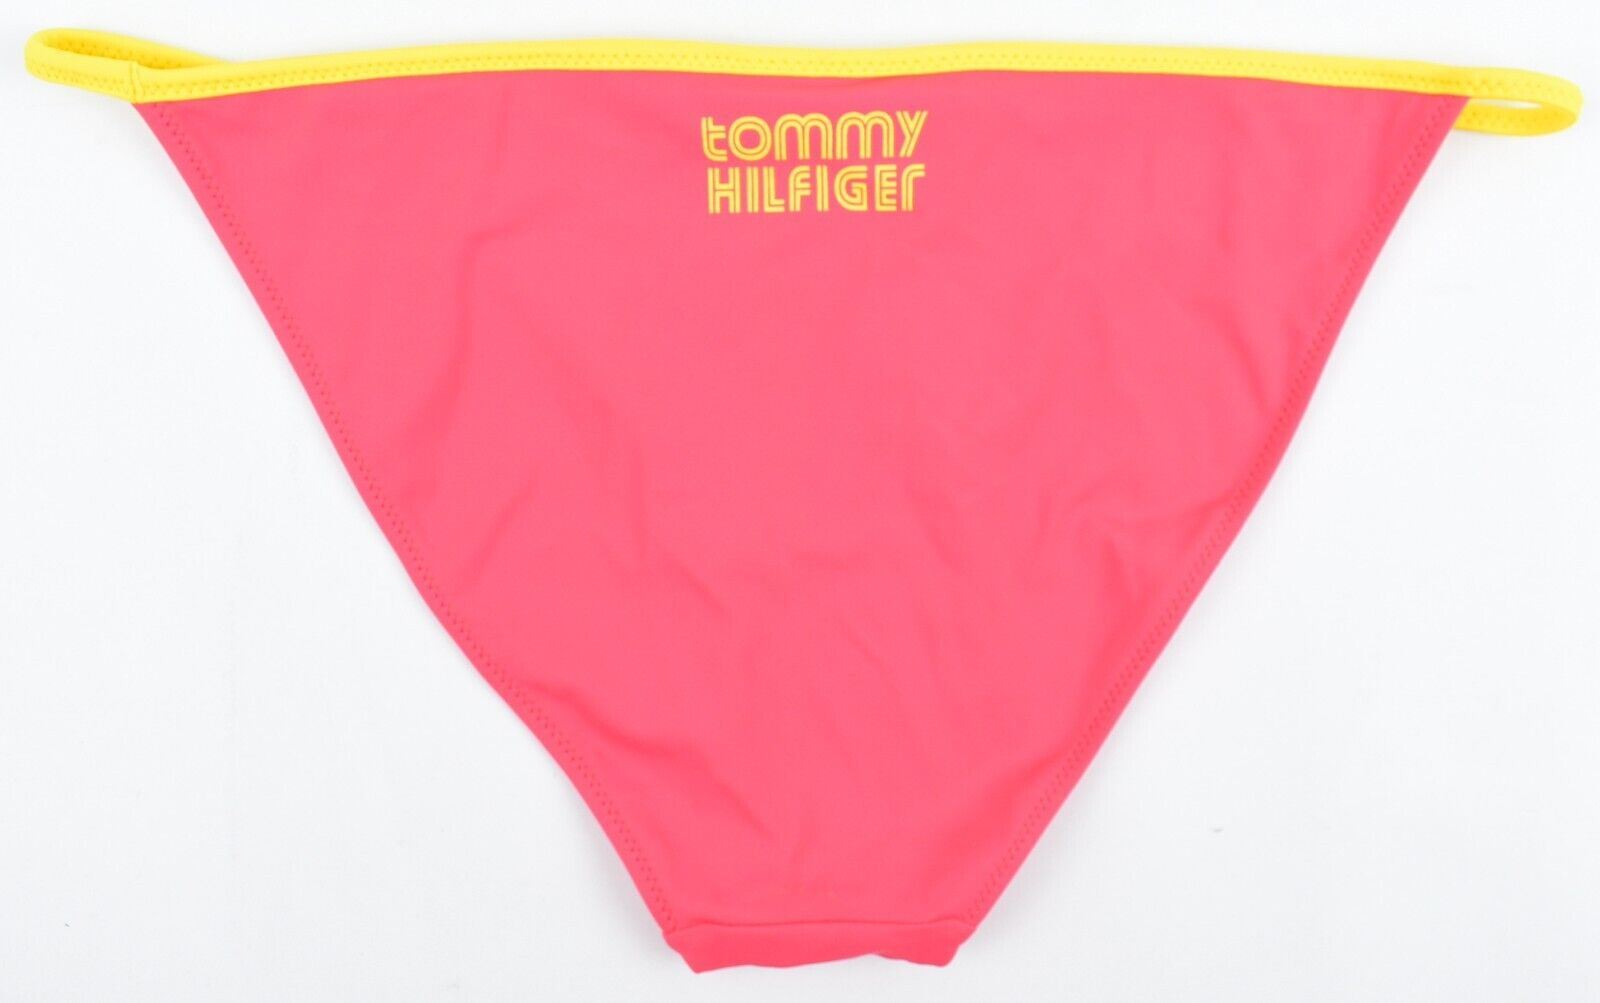 TOMMY HILFIGER Swimwear: Women's Bikini Bottoms, Laser Pink /Yellow, size L /14